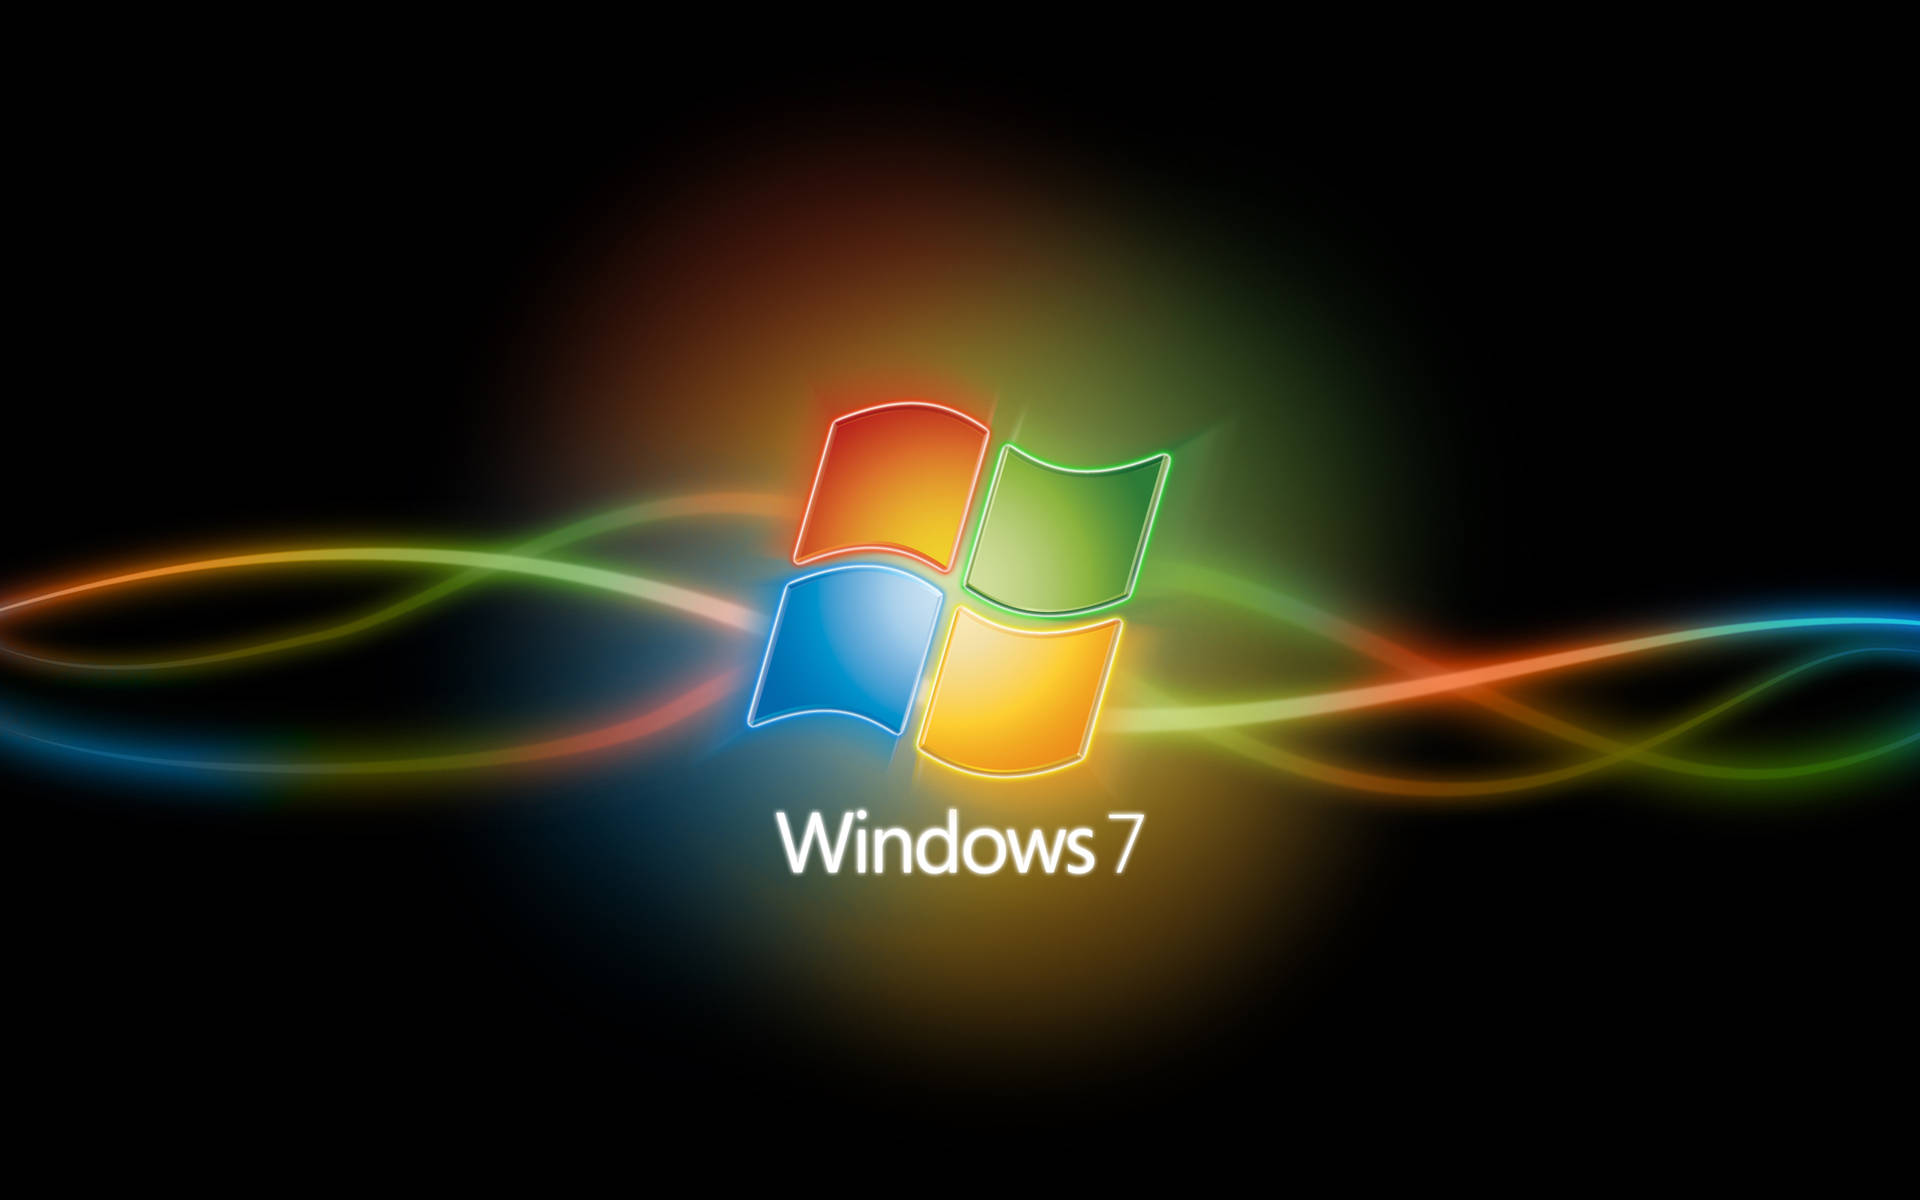 Illuminate Your Desktop with a Windows 7 Logo Wallpaper